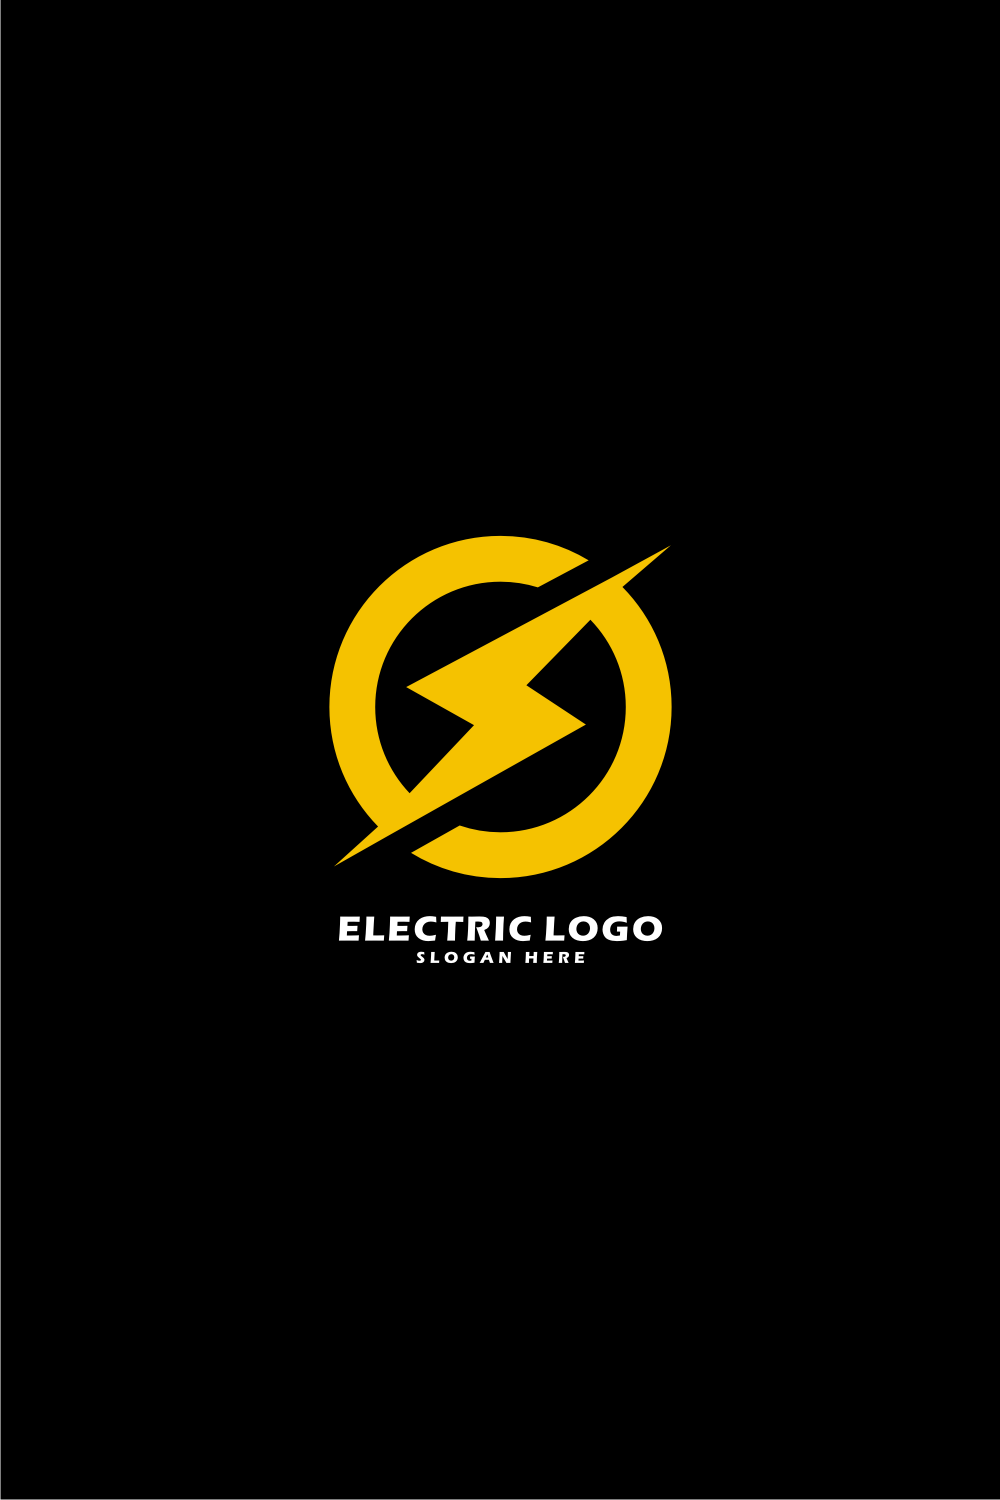 Electric Power Vector Logo Design Element pinterest image.